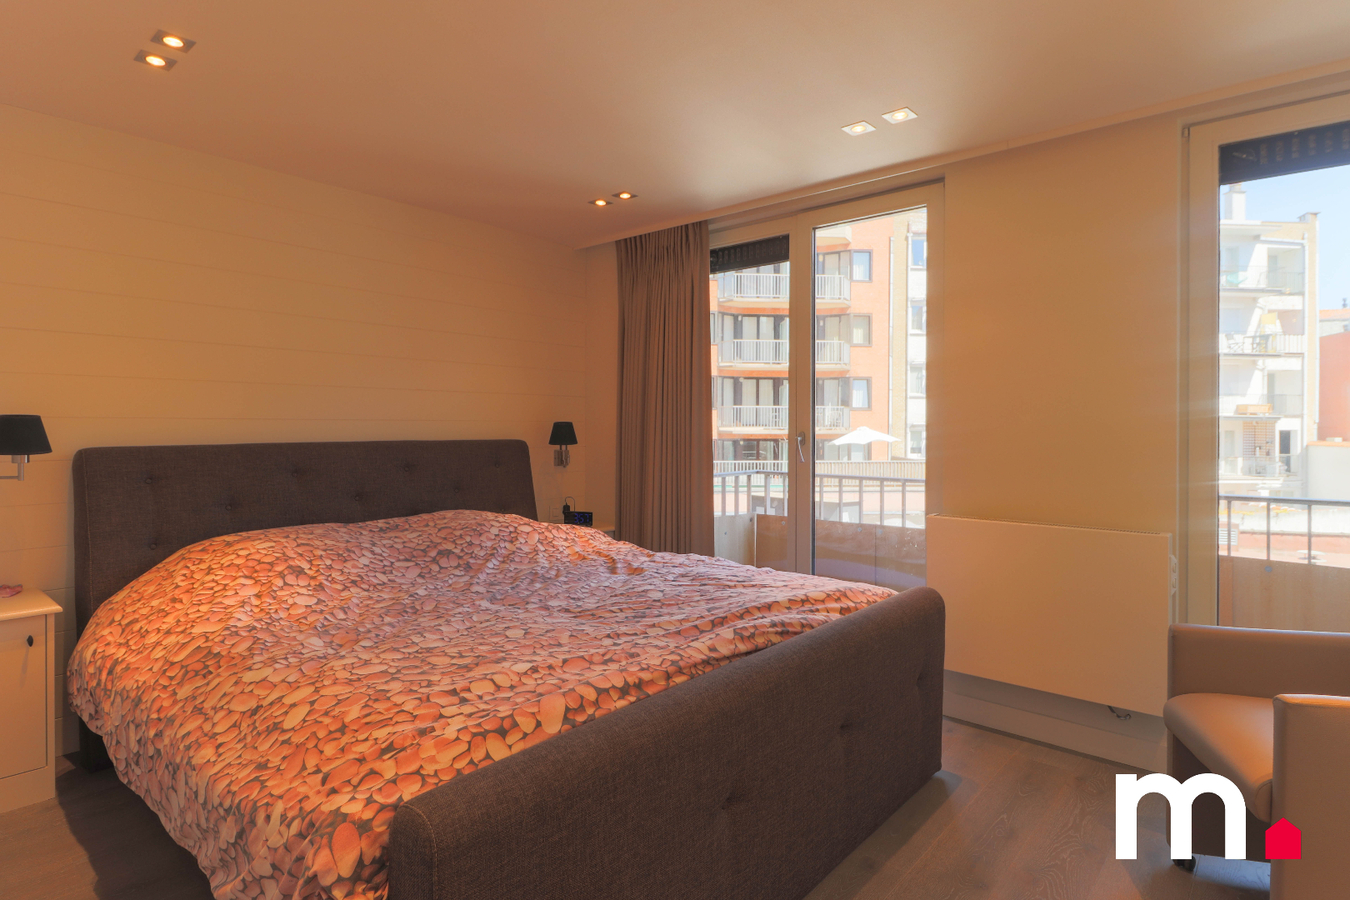 2 slaapkamer appartement op topligging in Knokke! 